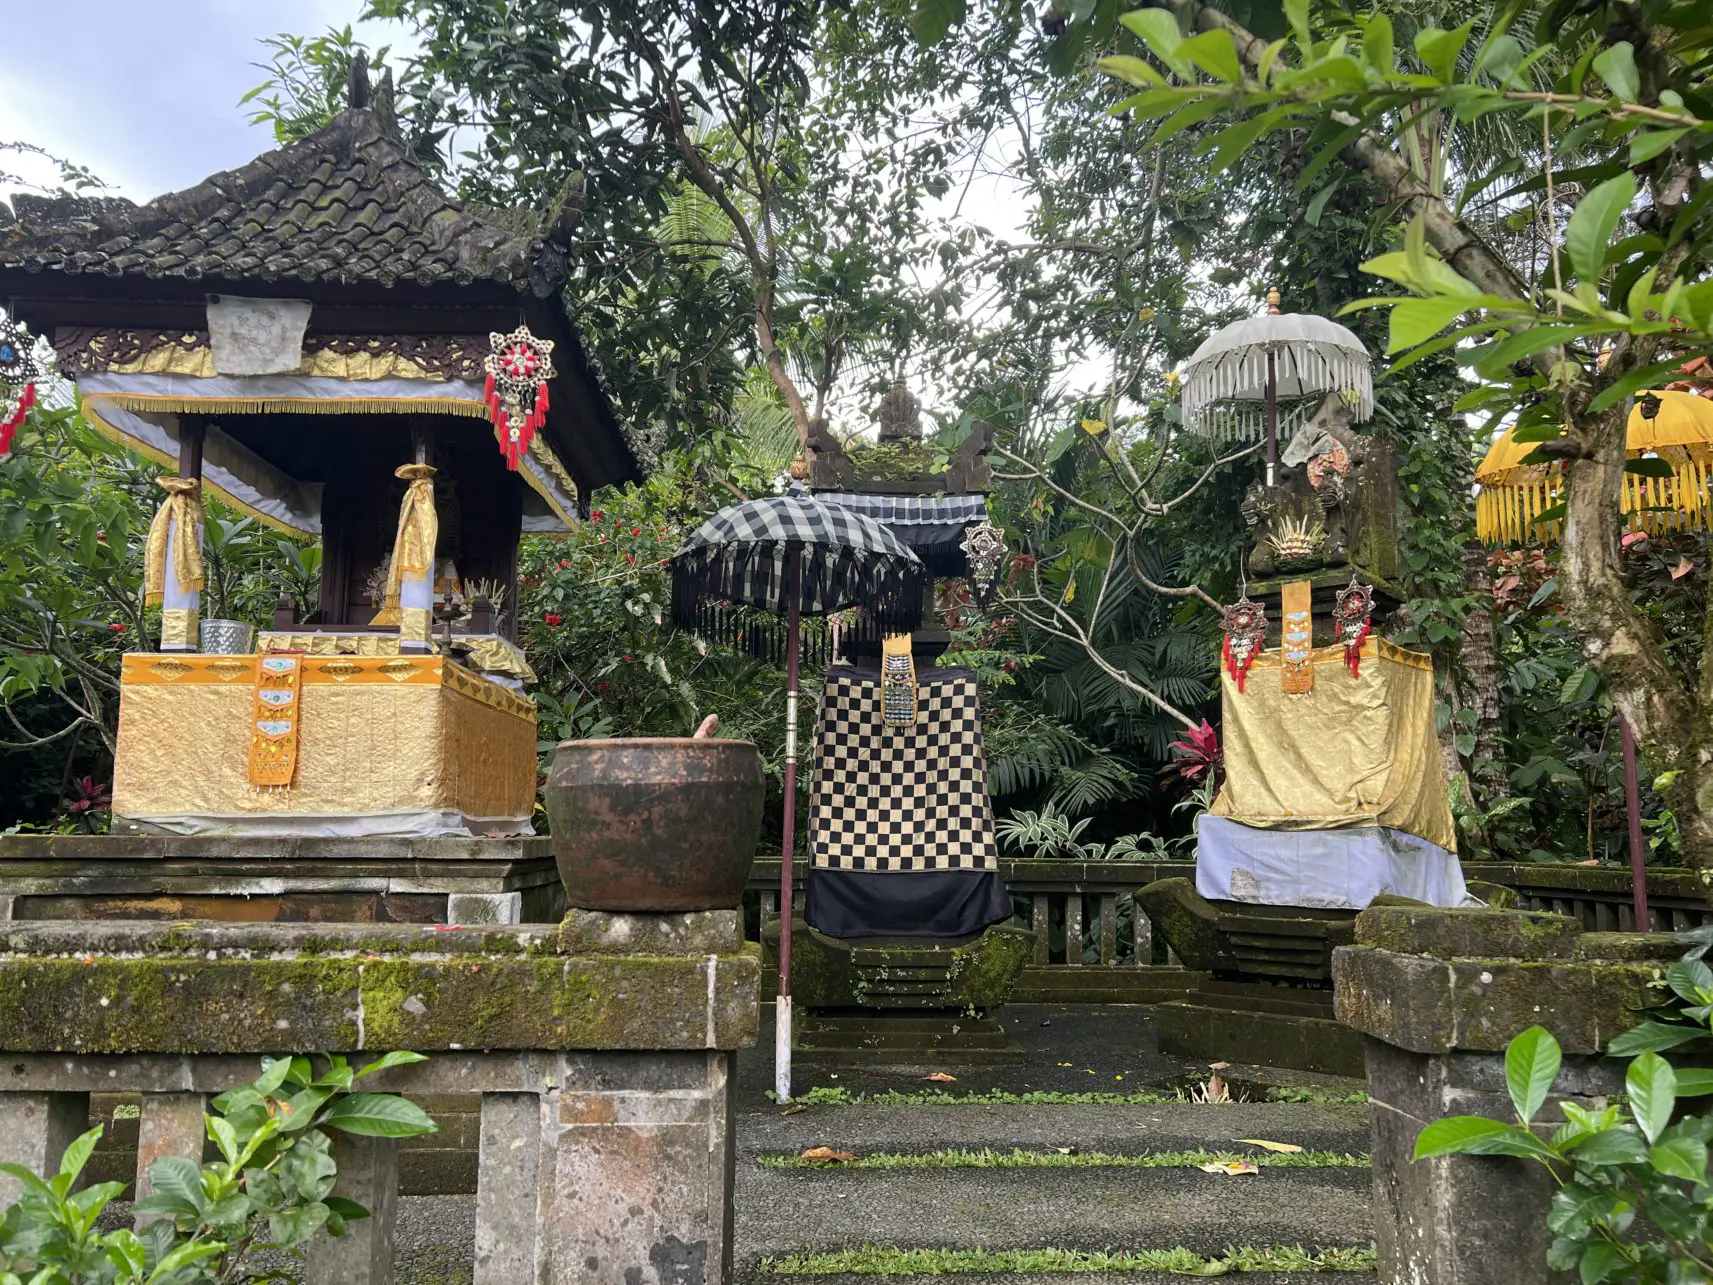 Purification-Ritual im Tempel des Oneworld in Bali, Indoensien.